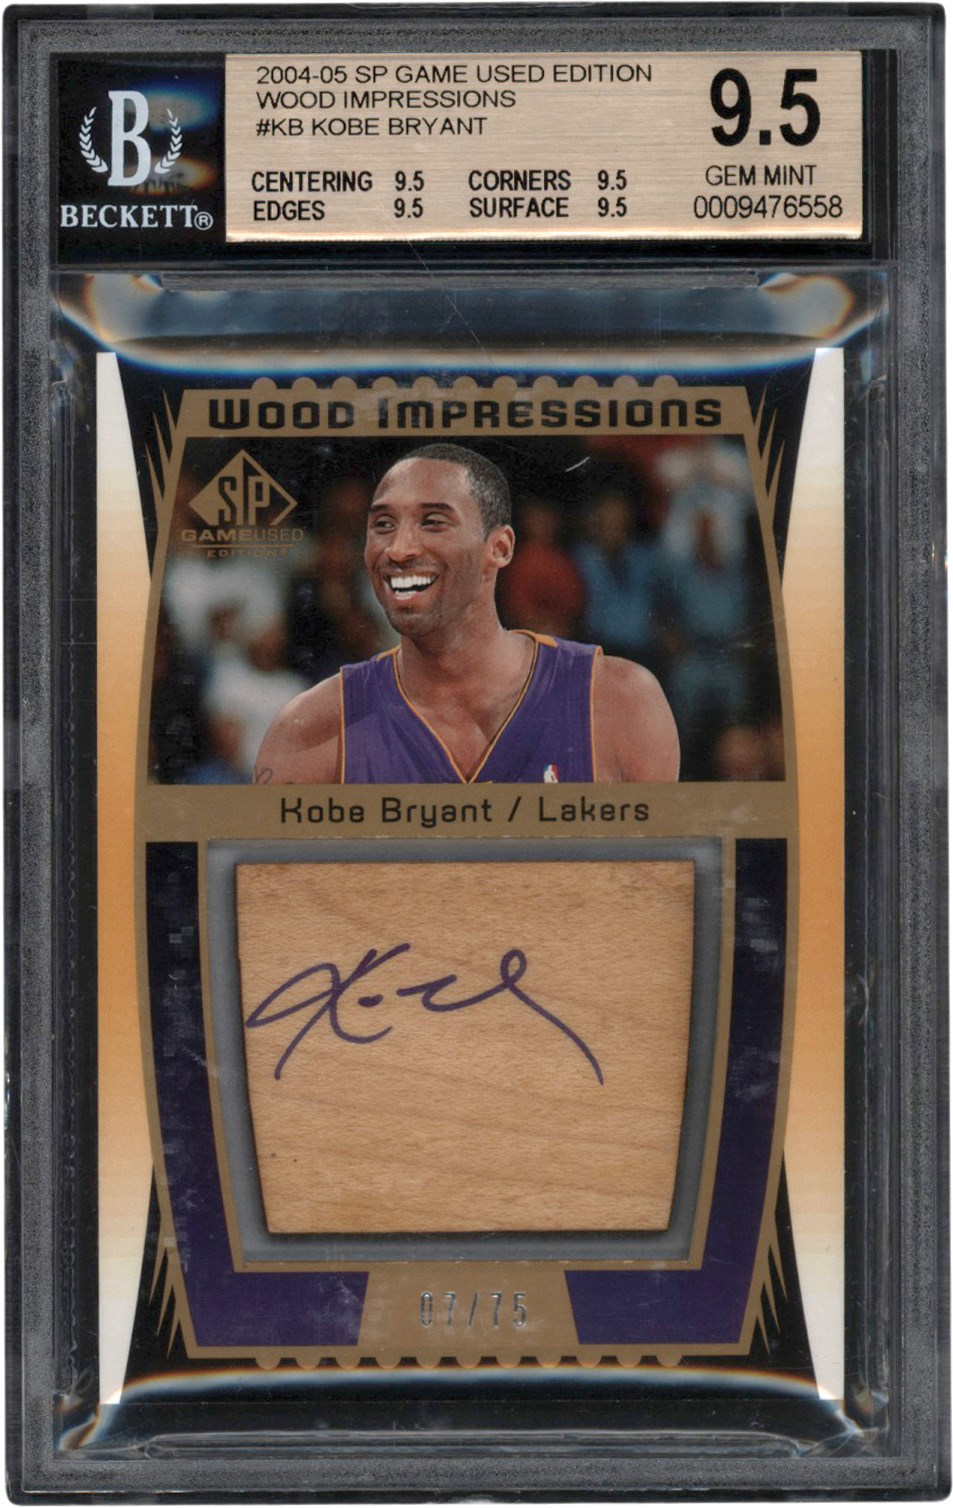 2004-2005 SP Game Used Basketball Wood Impressions #KB Kobe Bryant Autograph Floor #7/75 BGS GEM MINT 9.5 Auto 10 (True Gem)